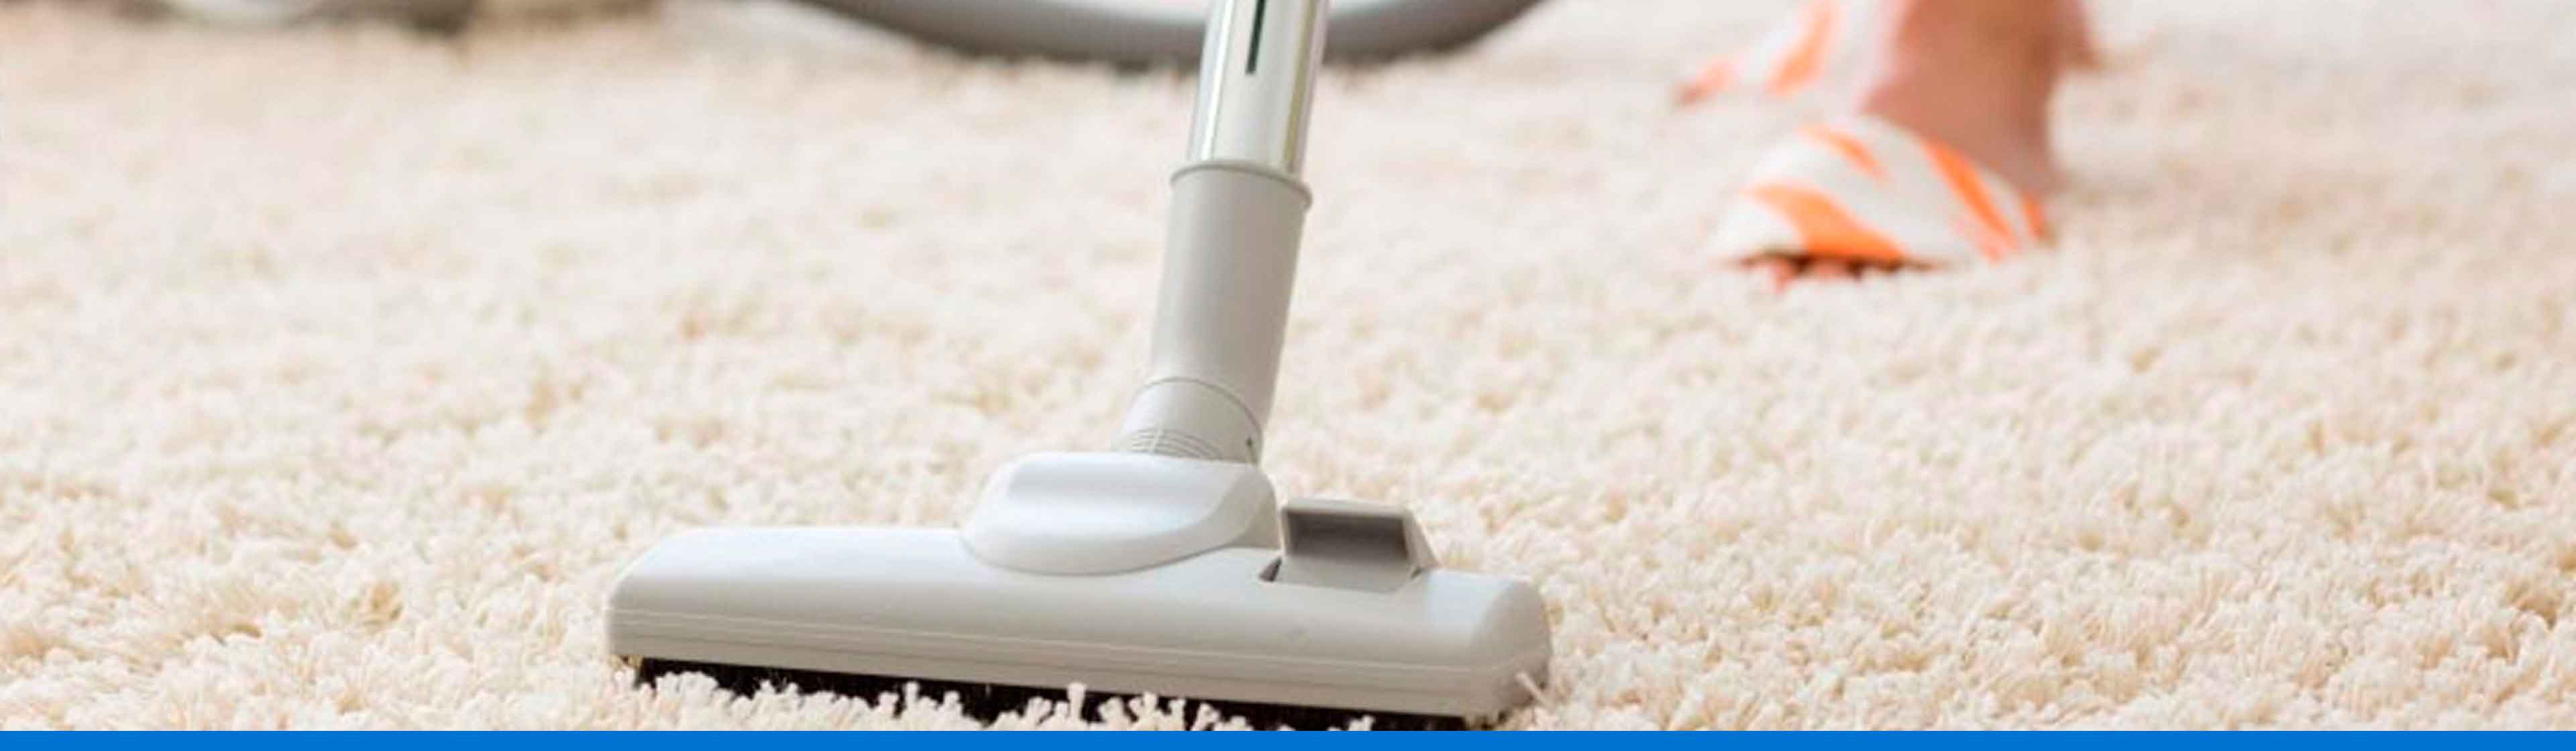 6 pasos acerca de cómo limpiar un tapete cómo limpiar un tapete